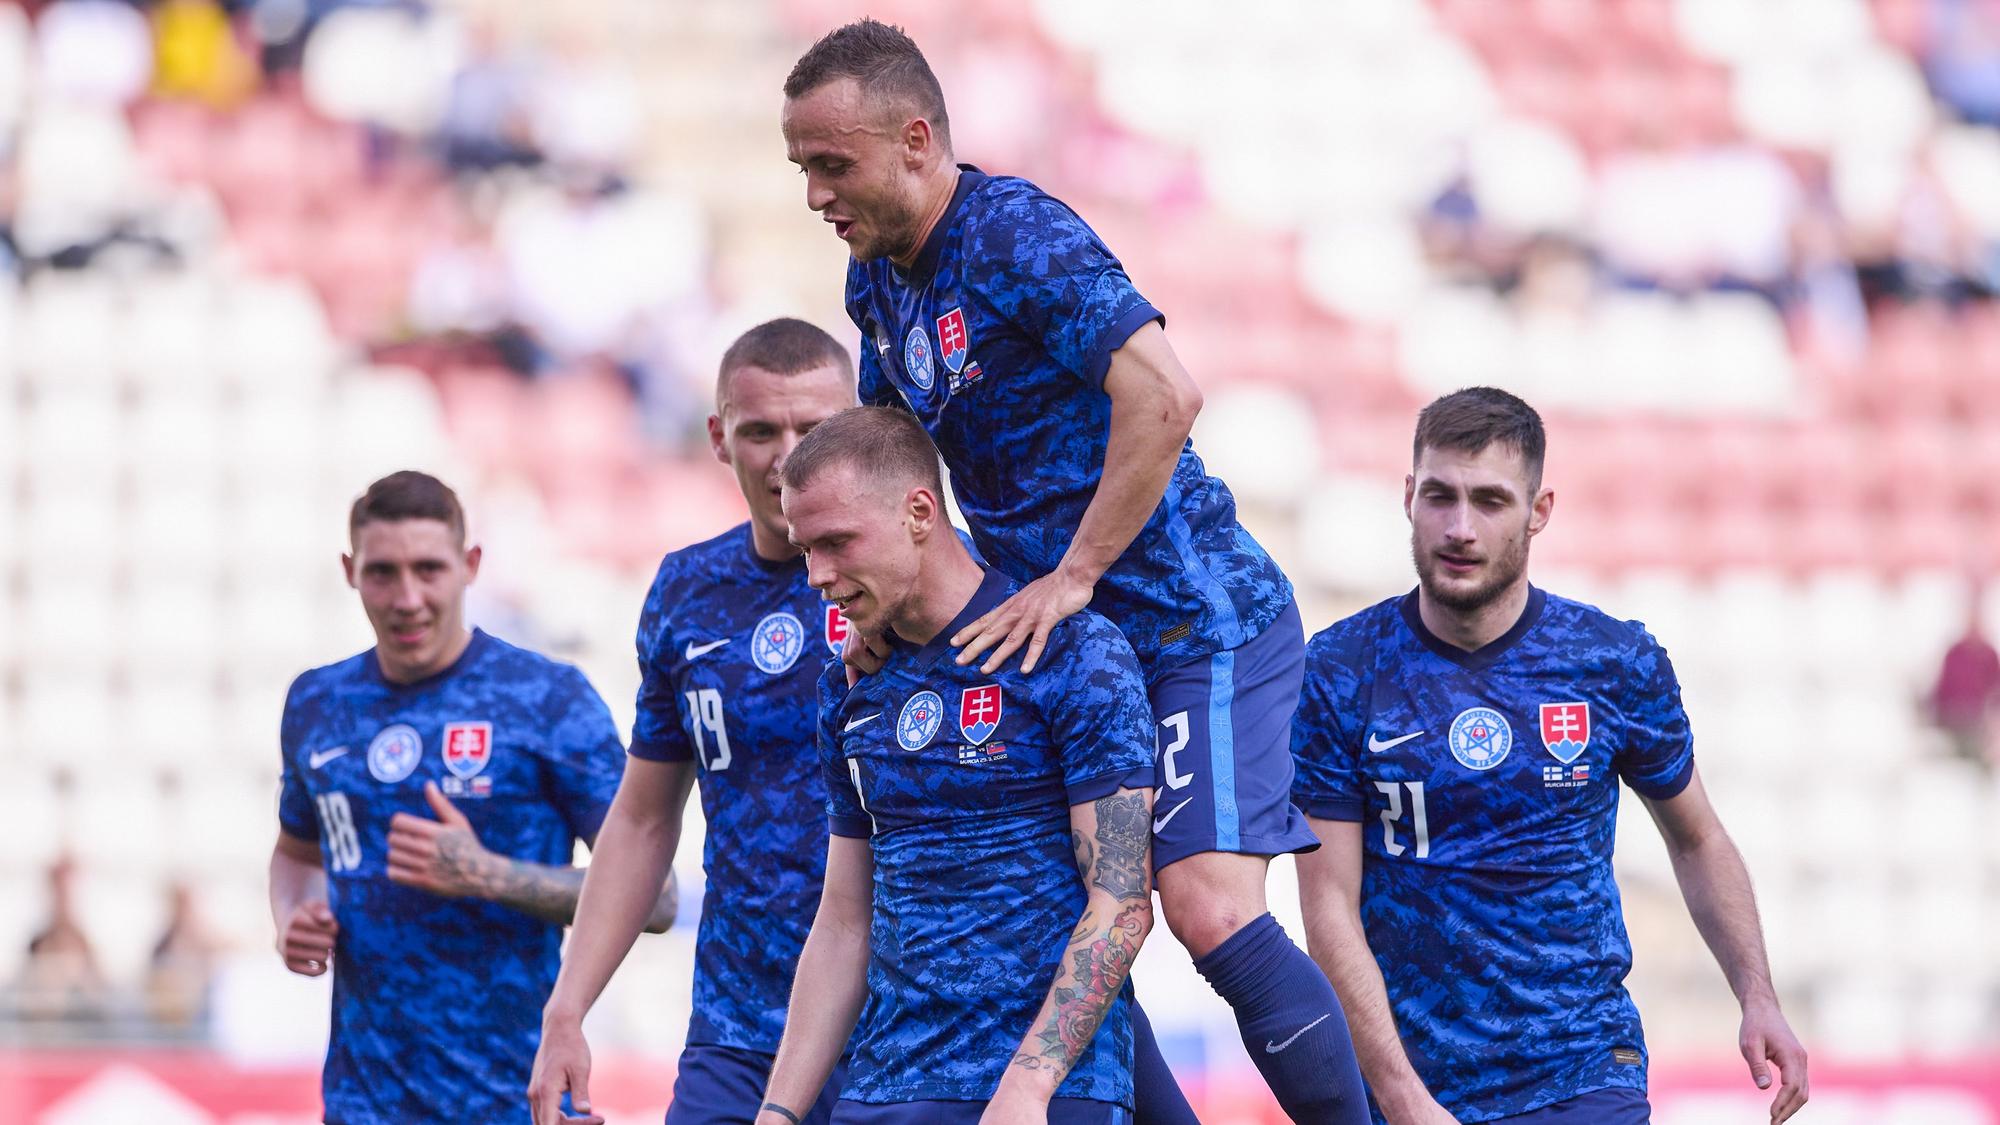 Futbal: Slovensko - Fínsko 2:0 - výsledok dnes | Šport.sk